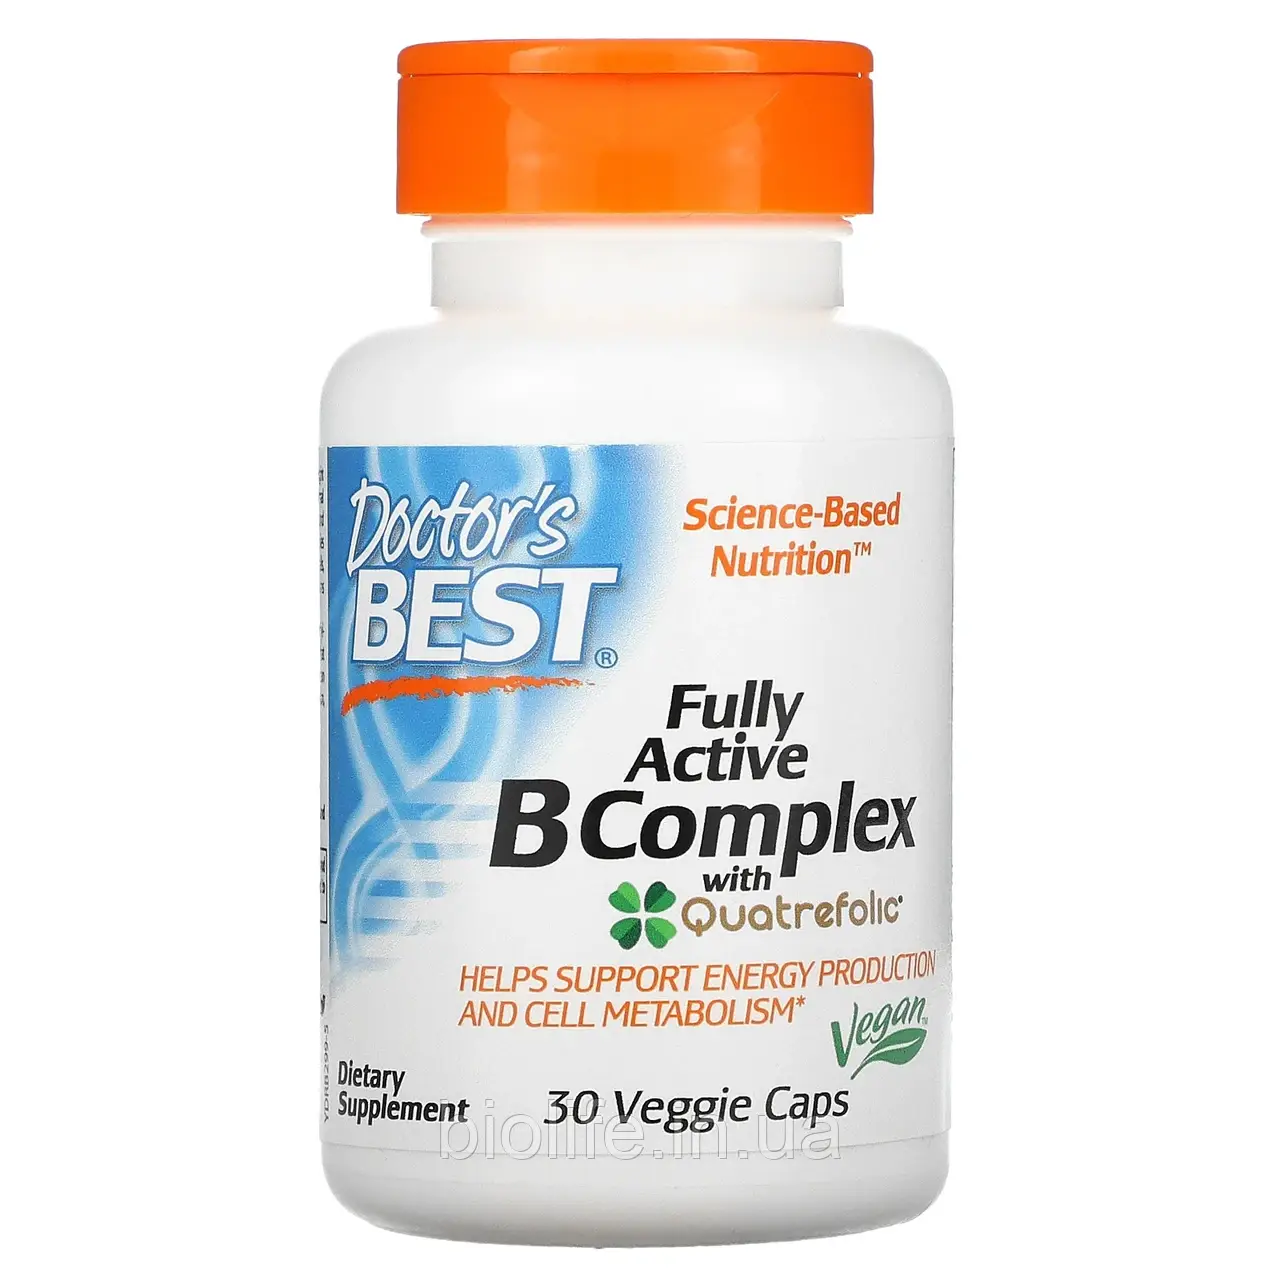 Doctor's s Best, Fully Active B Complex with Quatrefolic, 30 Veggie Caps, офіційний сайт